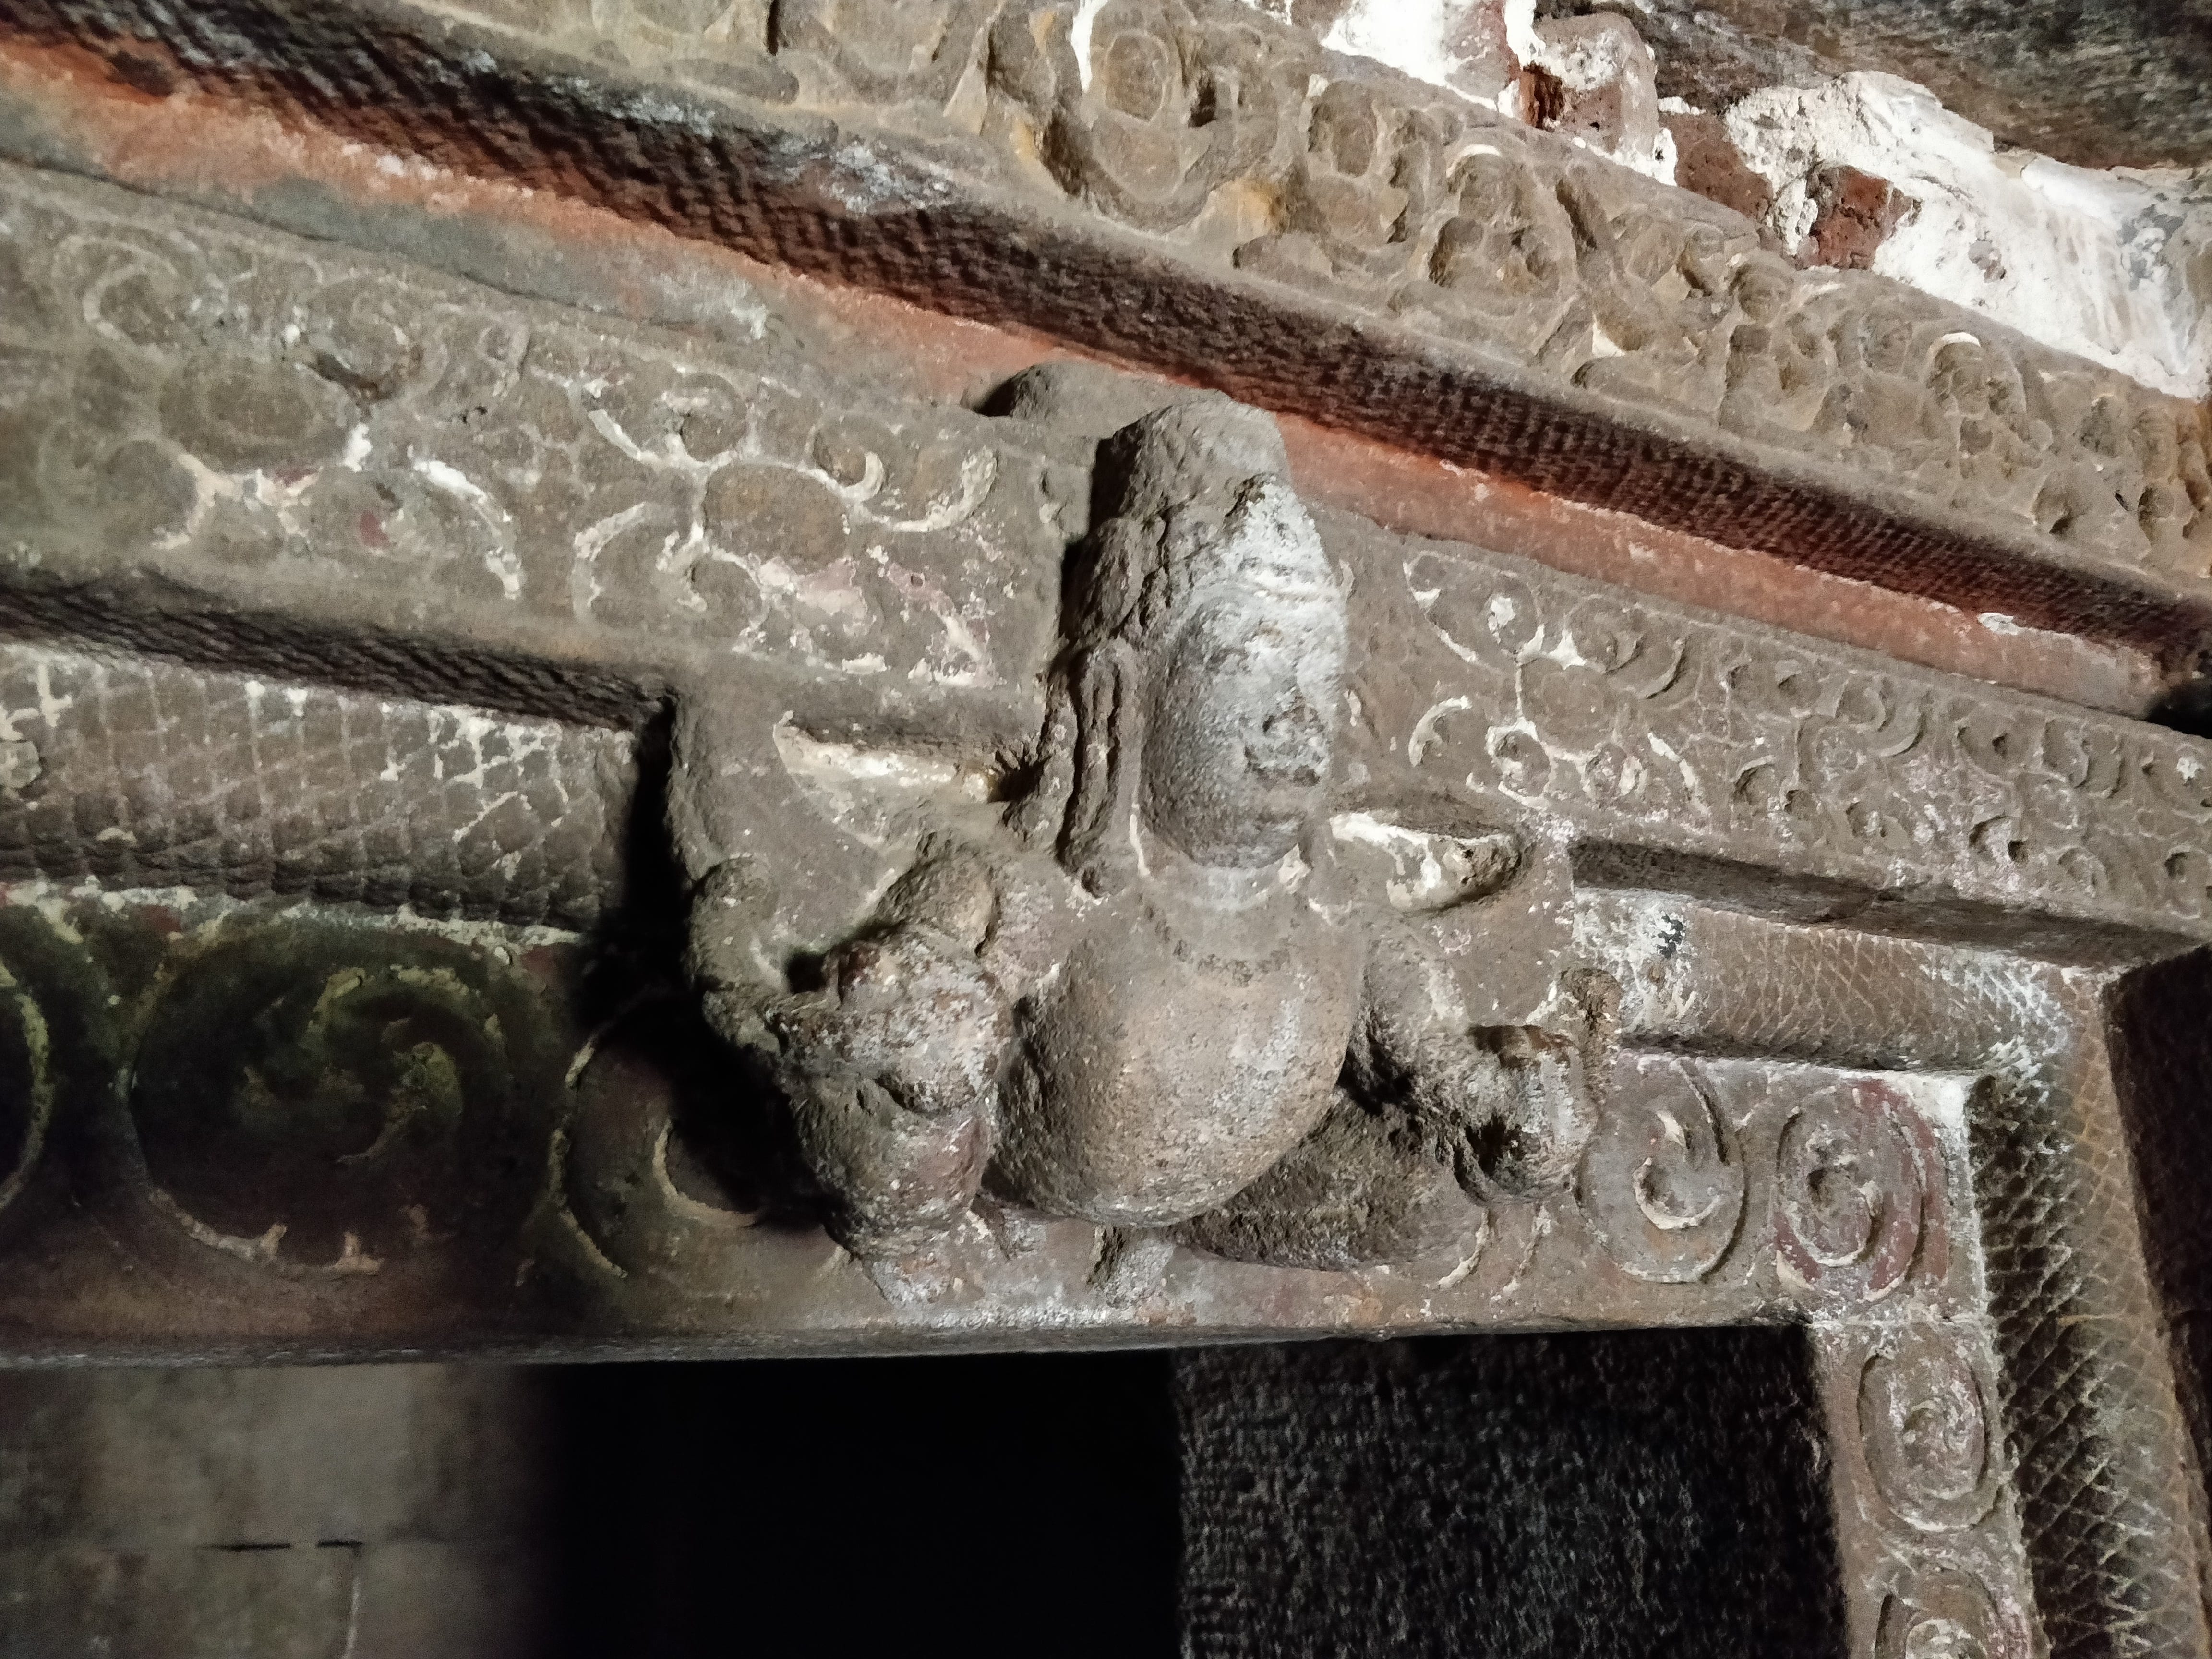 Garuda guarding the door at every temple